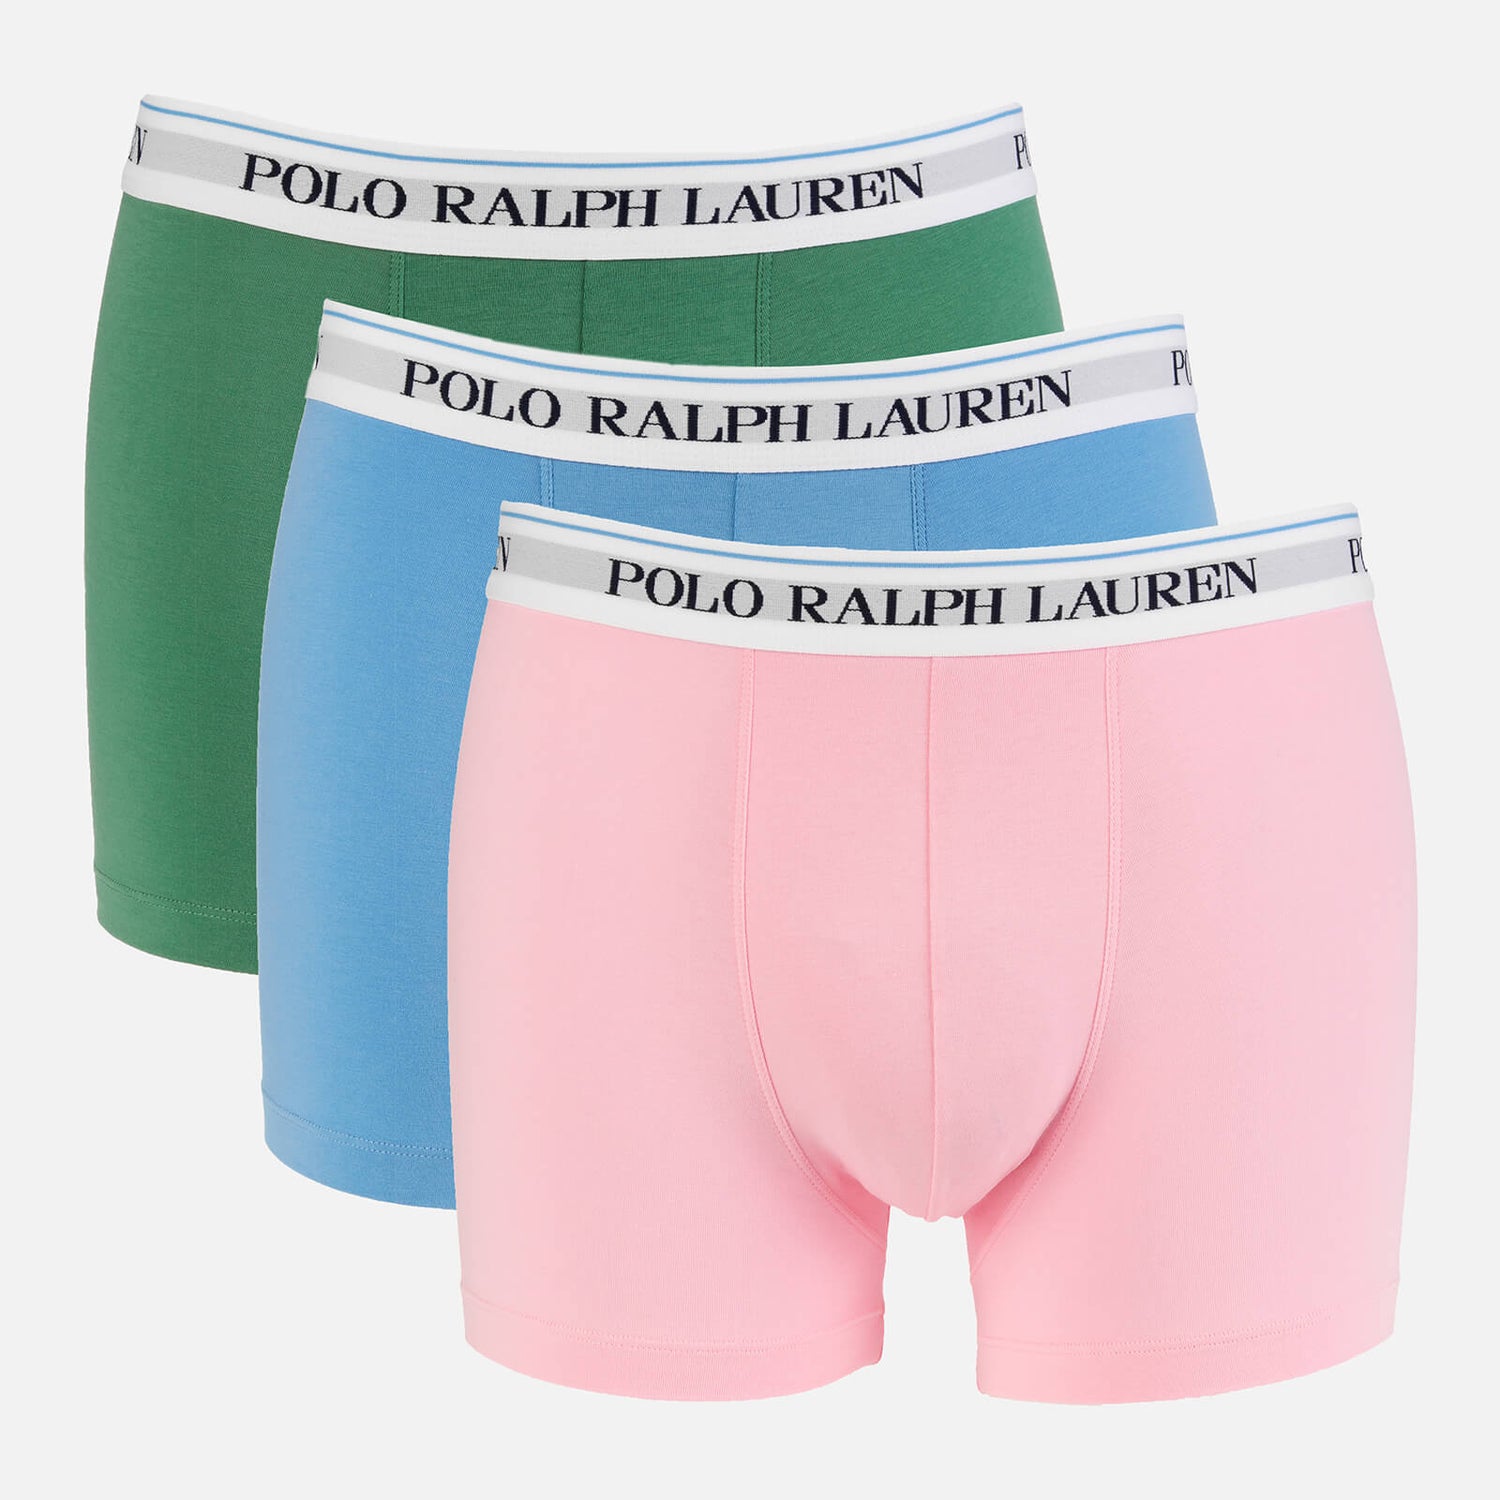 Polo Ralph Lauren Men's 3-Pack Classic Trunk Boxer Shorts - Green/Rose/Blue